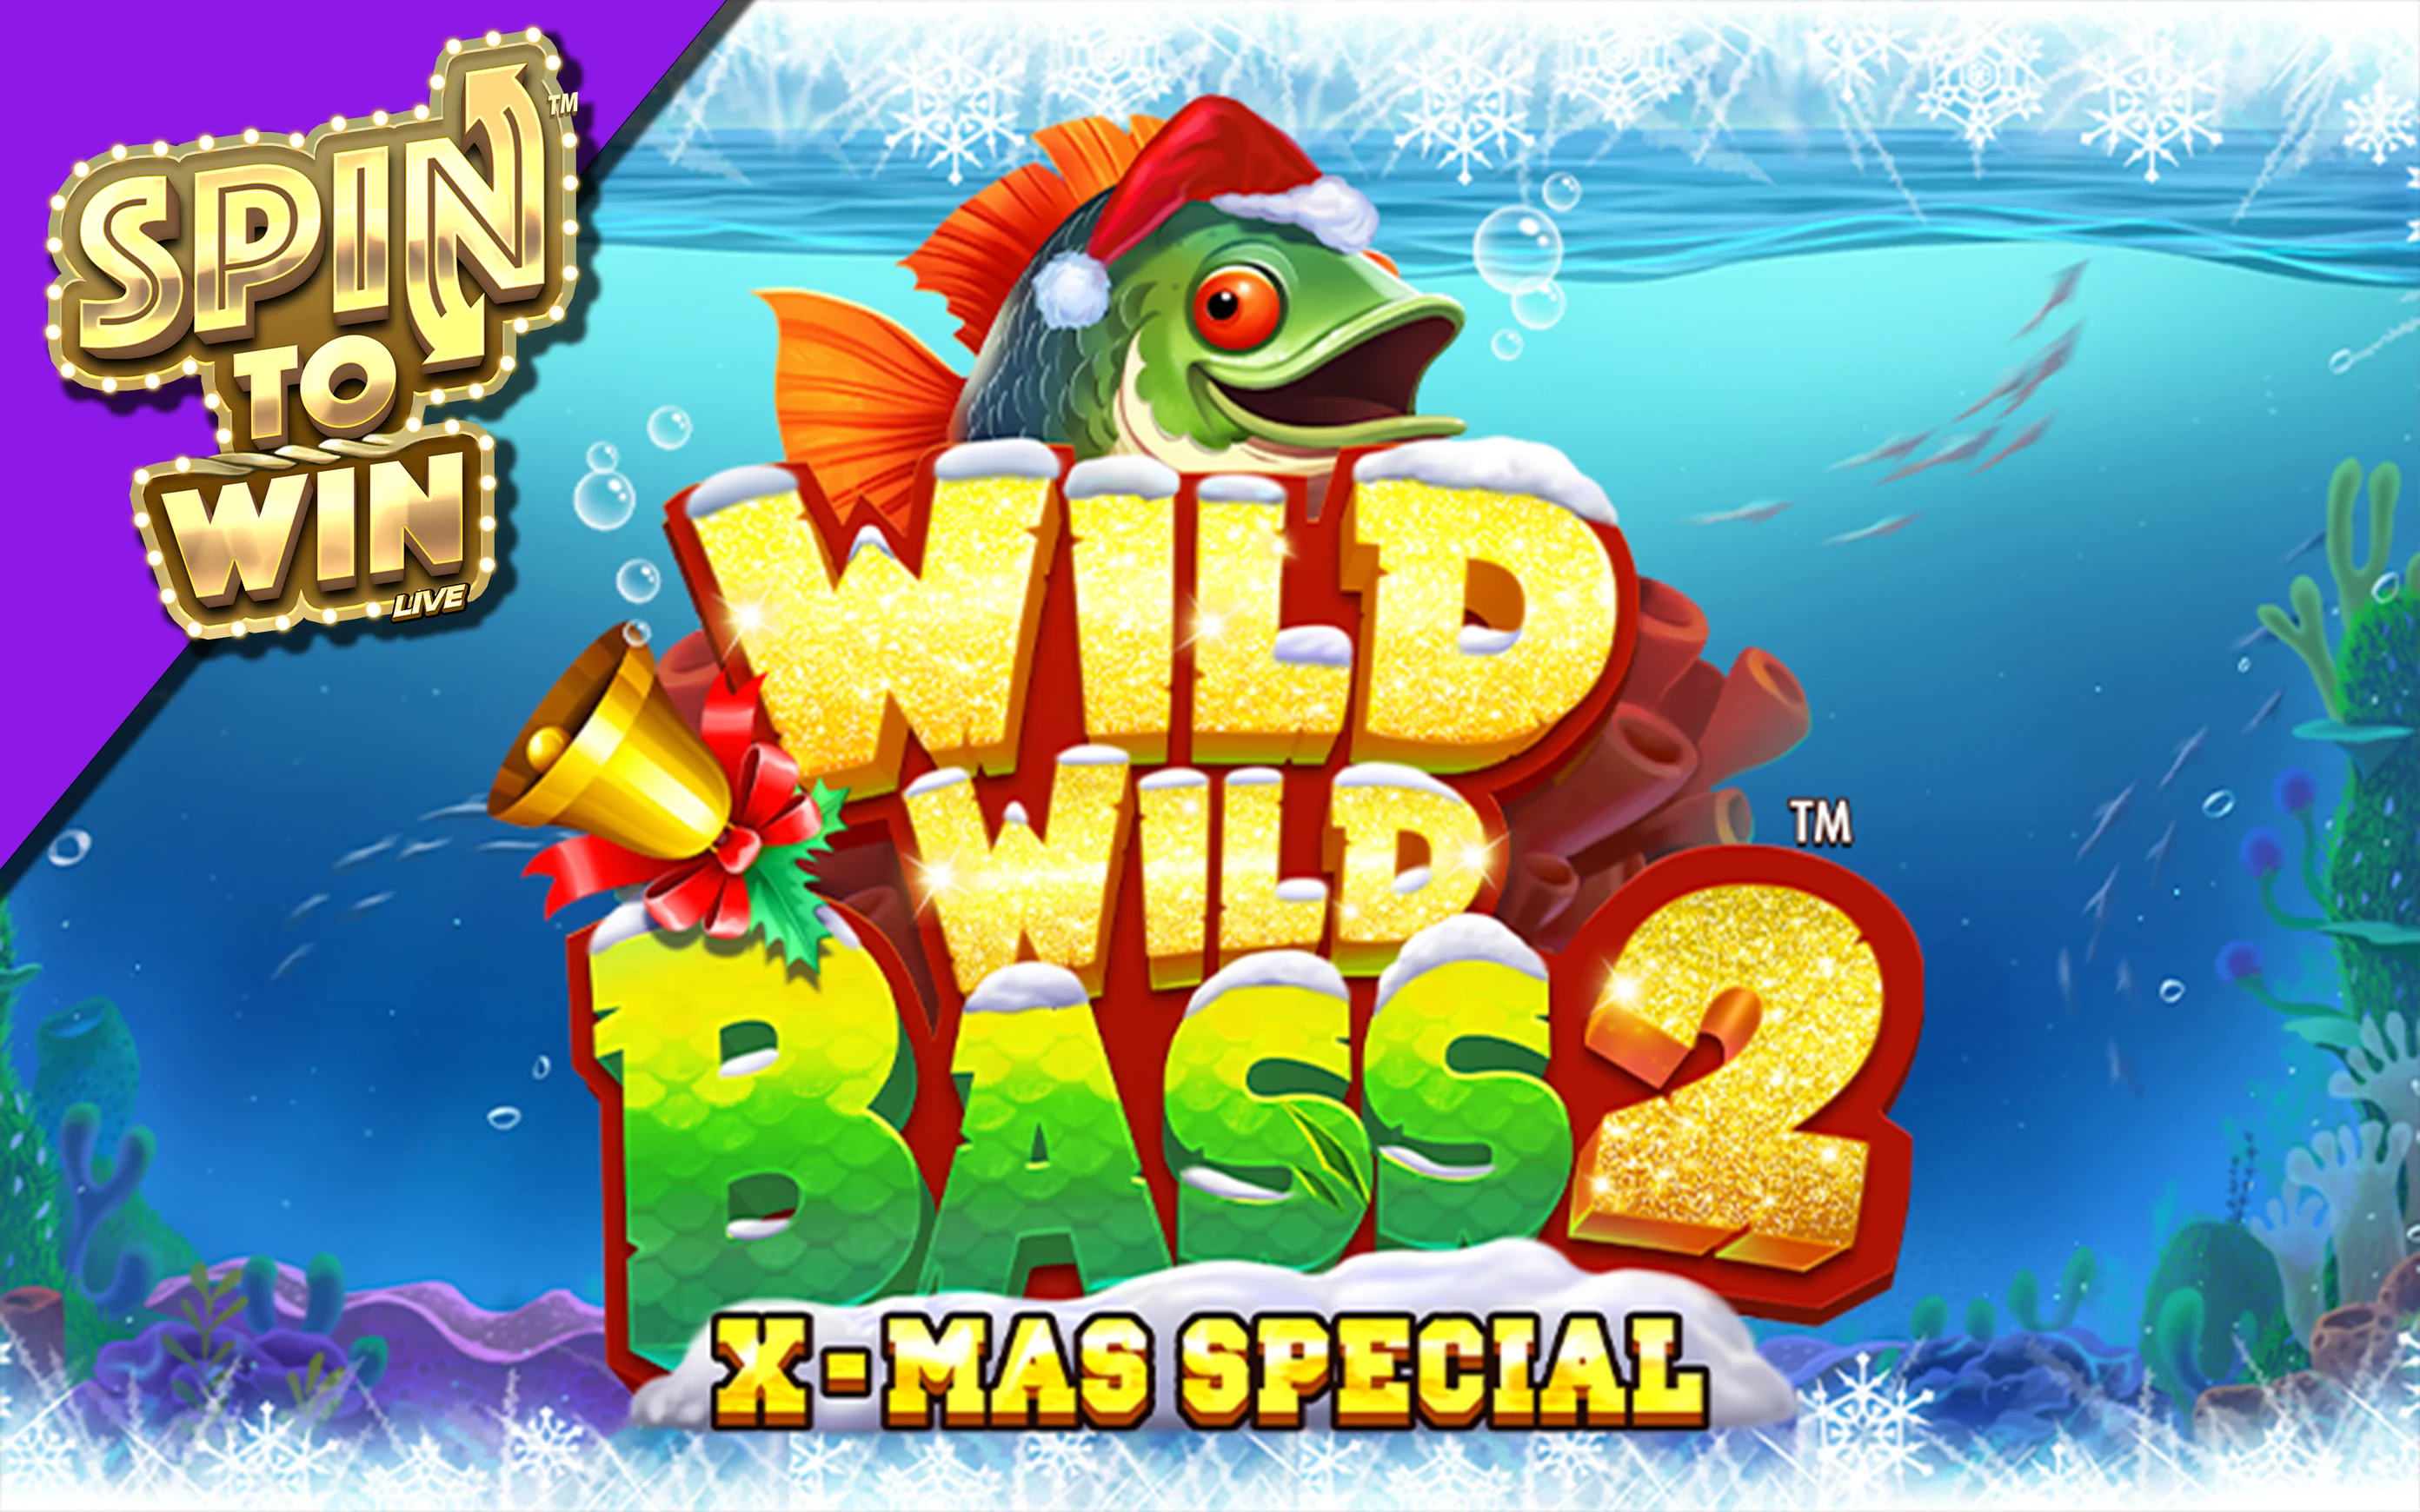 Spil Wild Wild Bass 2 Xmas Special™ på Starcasino.be online kasino
